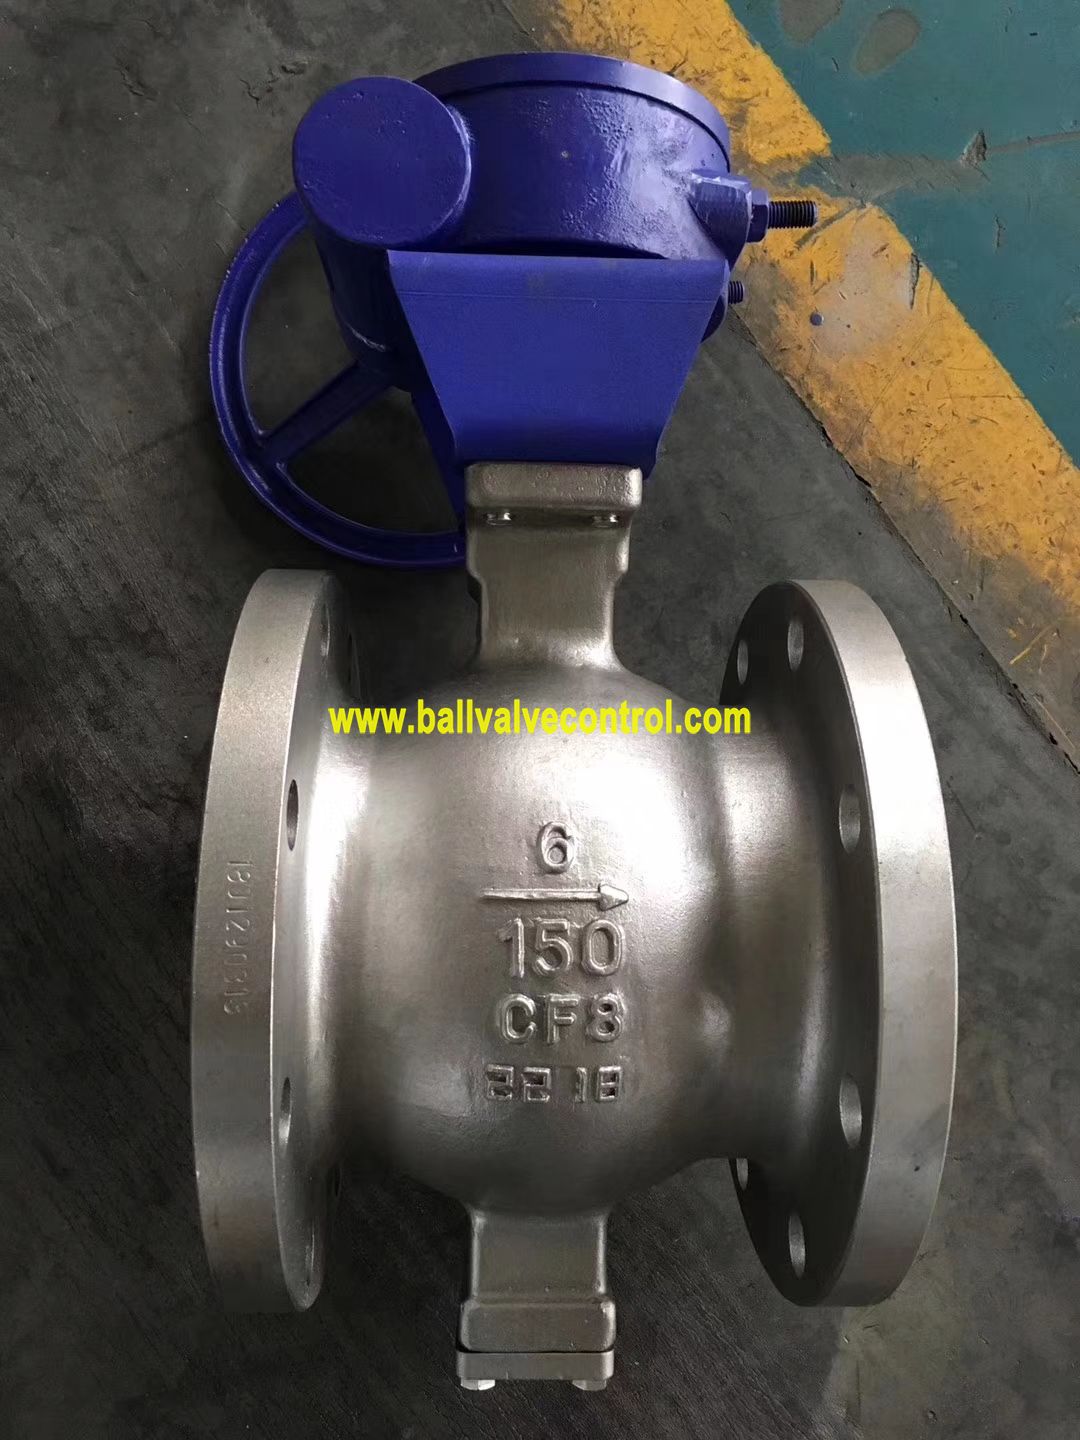 Stainless steel flange type segmented ball valve